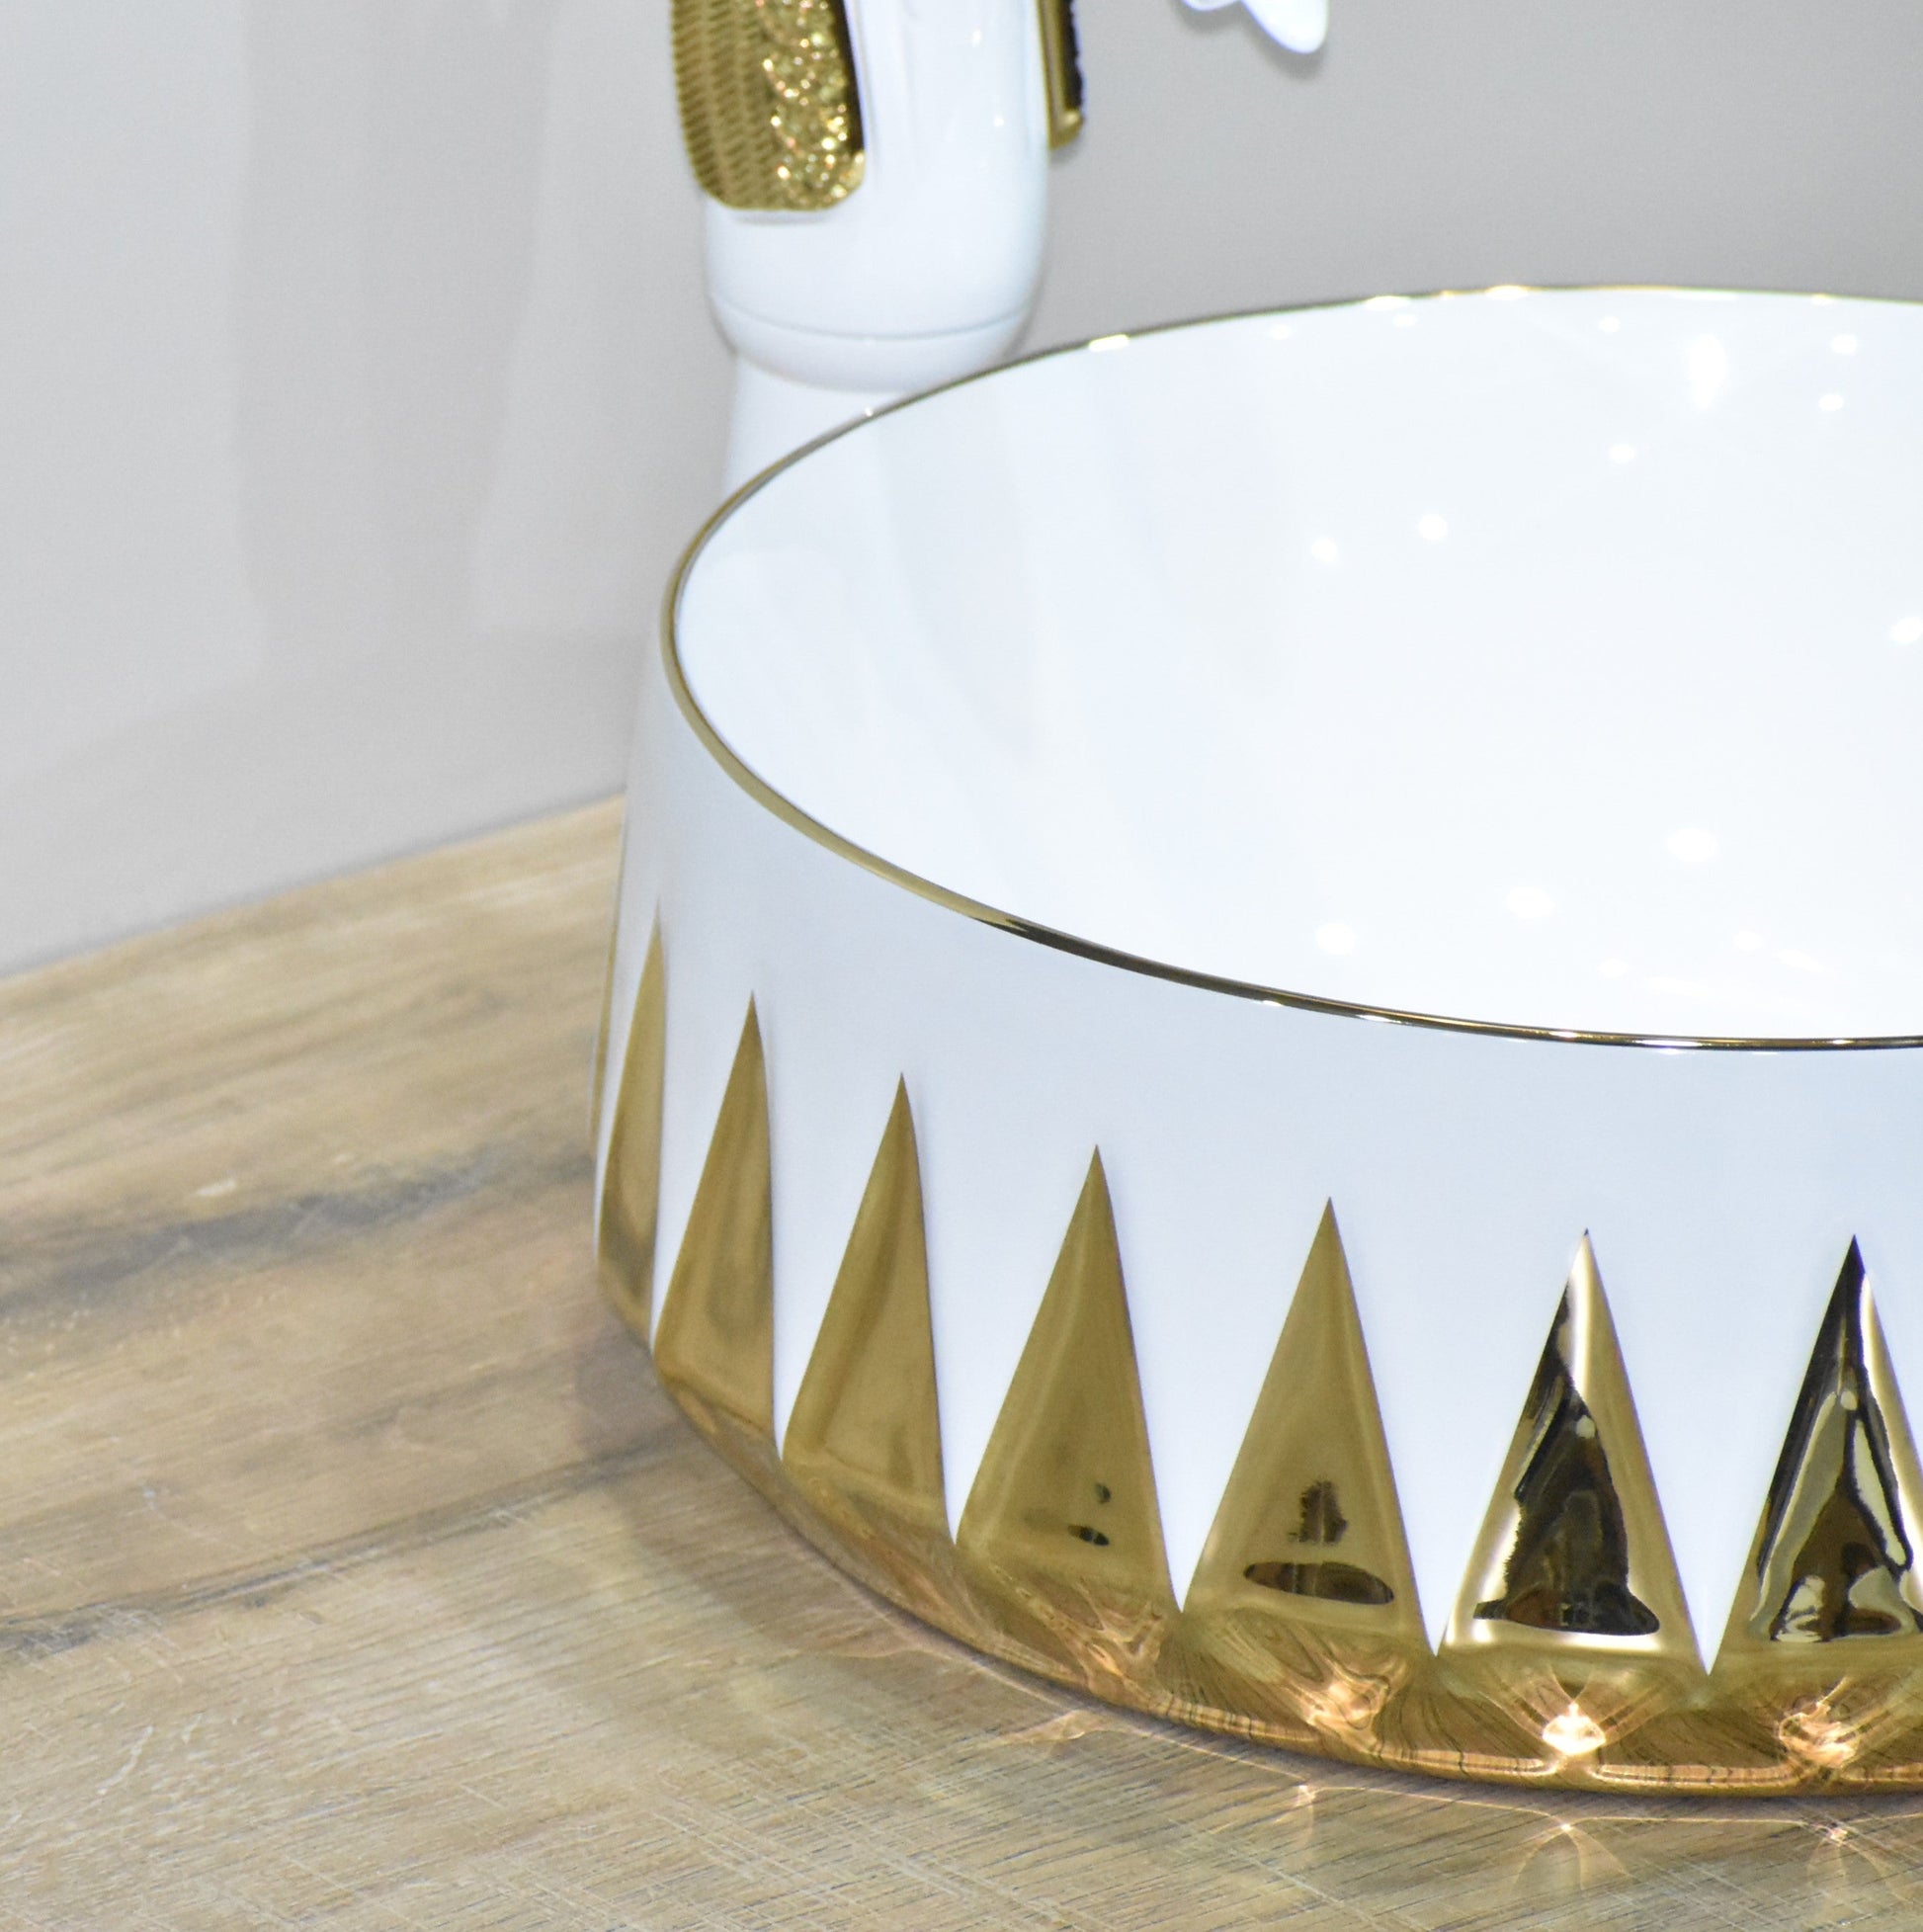 InArt Ceramic Counter or Table Top Wash Basin 36x36 CM Gold White Color - InArt-Studio